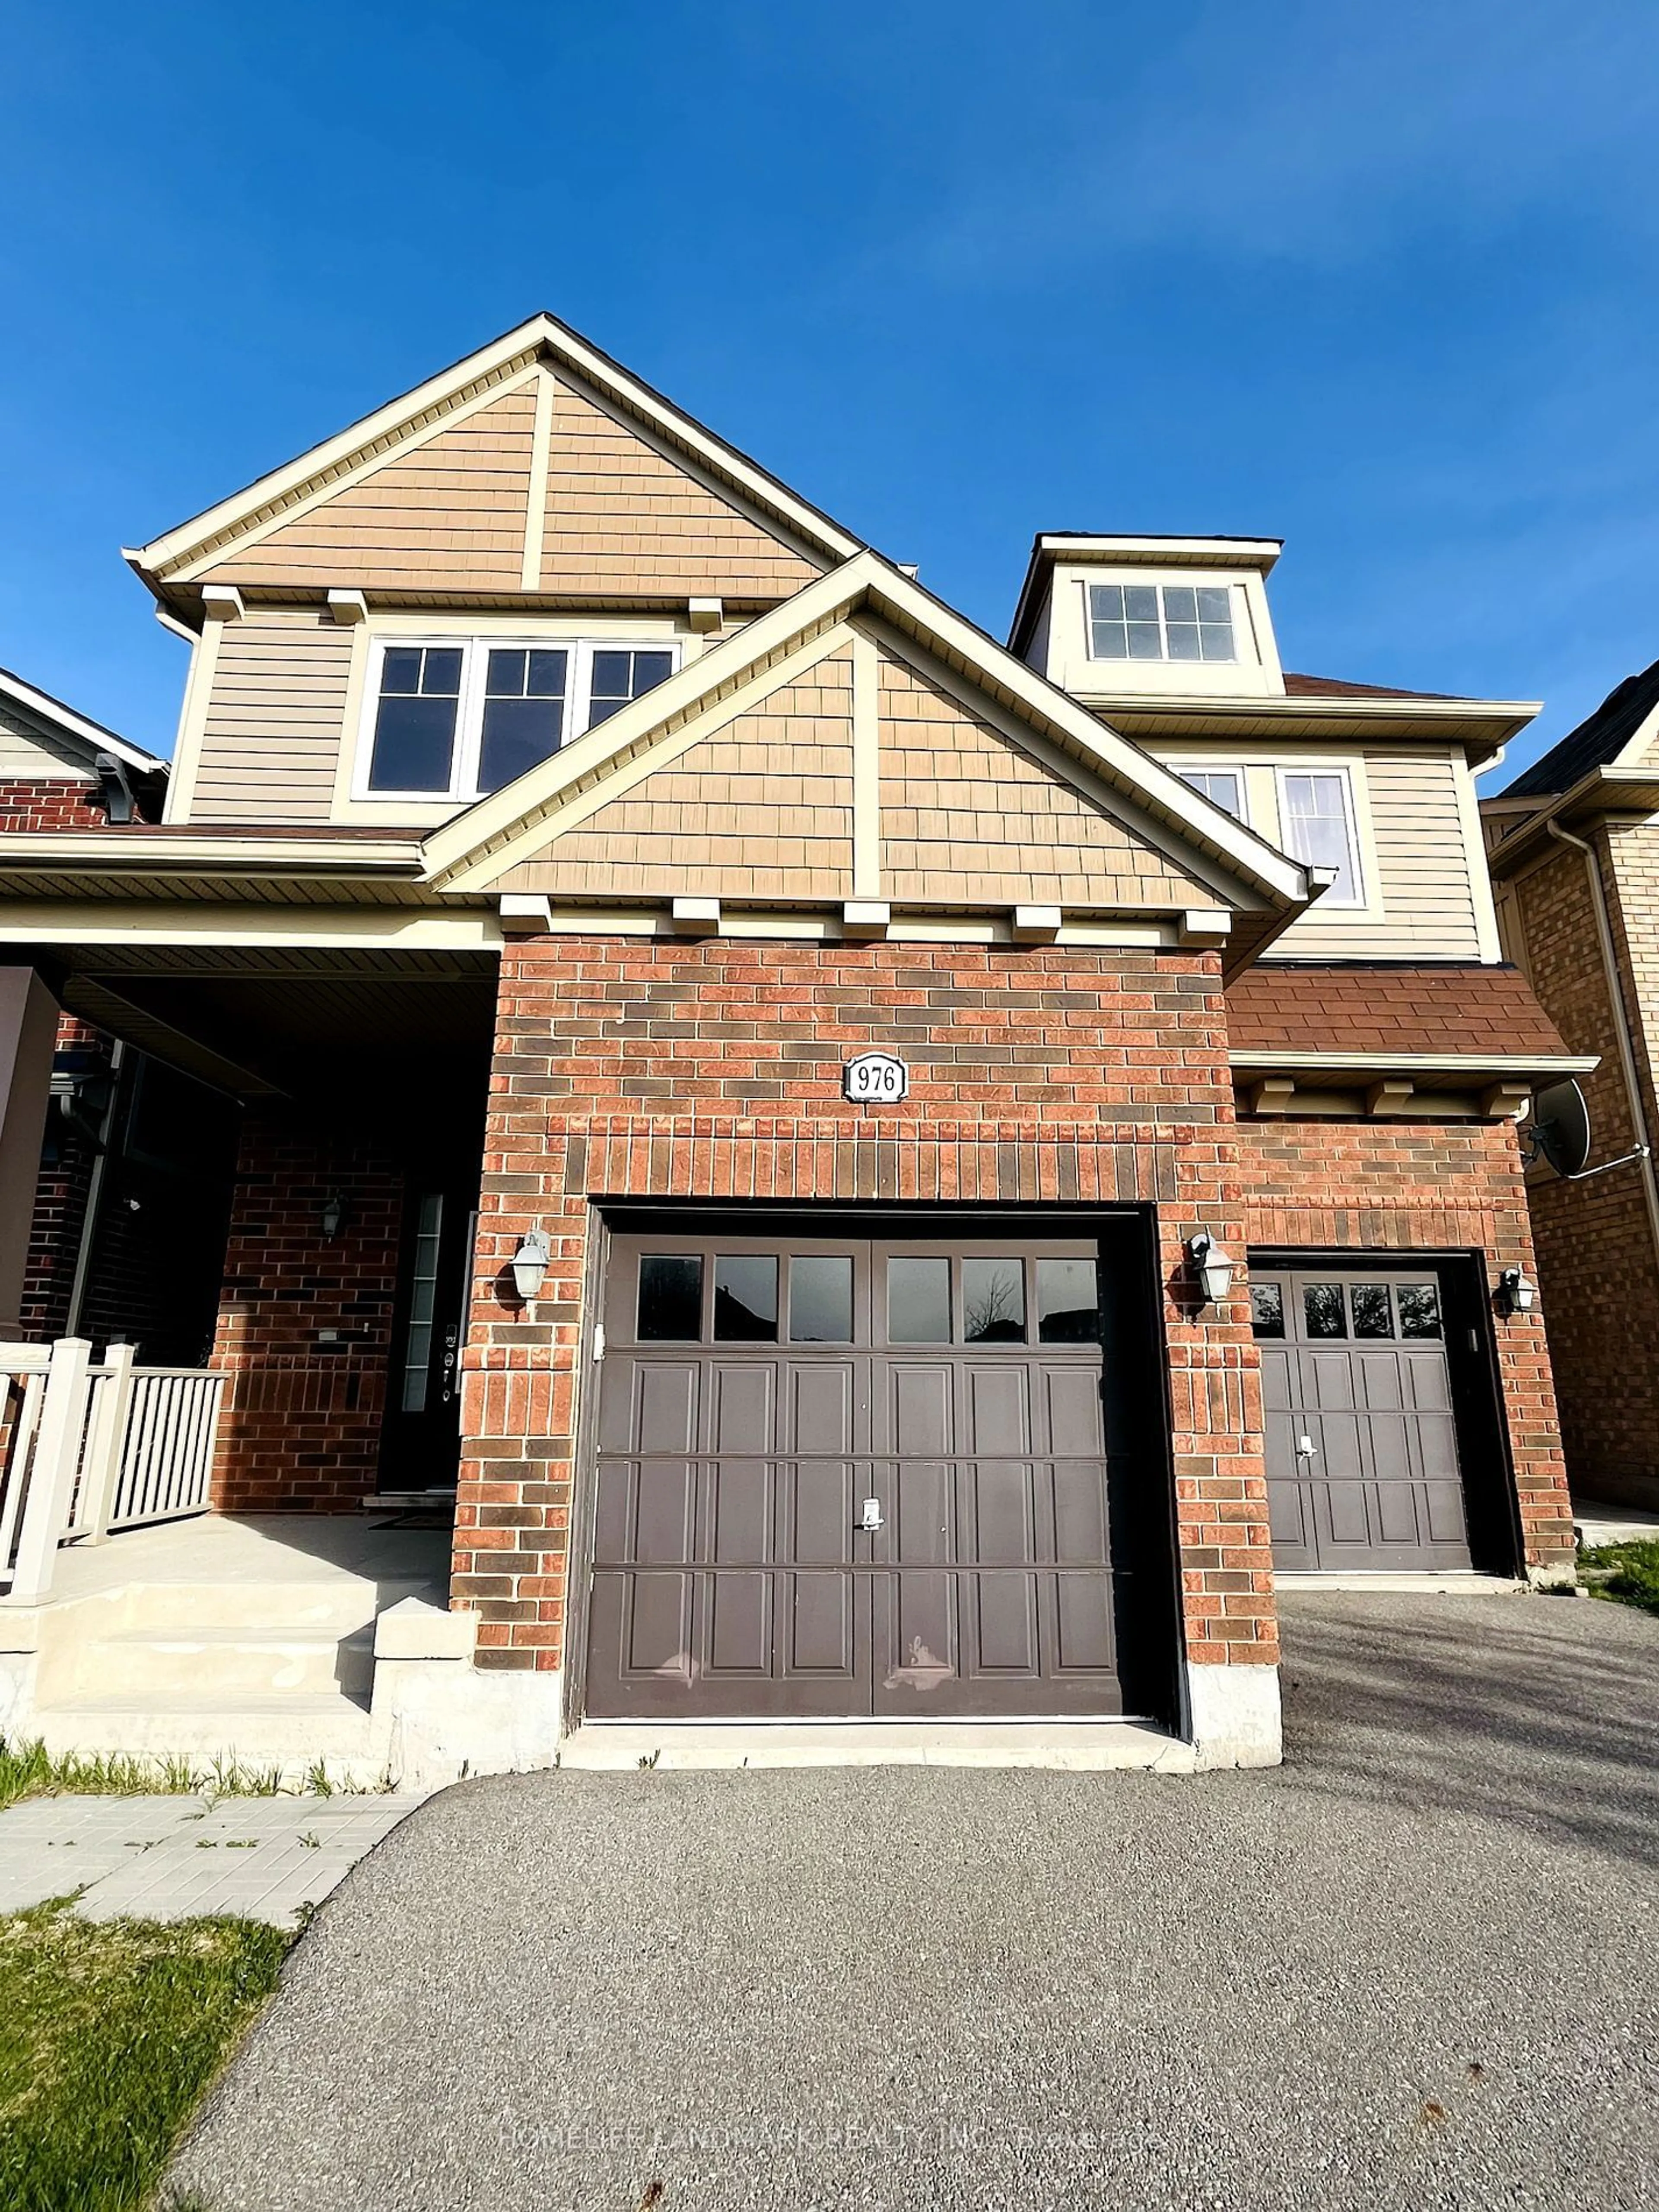 Home with brick exterior material for 976 Clark Blvd, Milton Ontario L9T 6P6